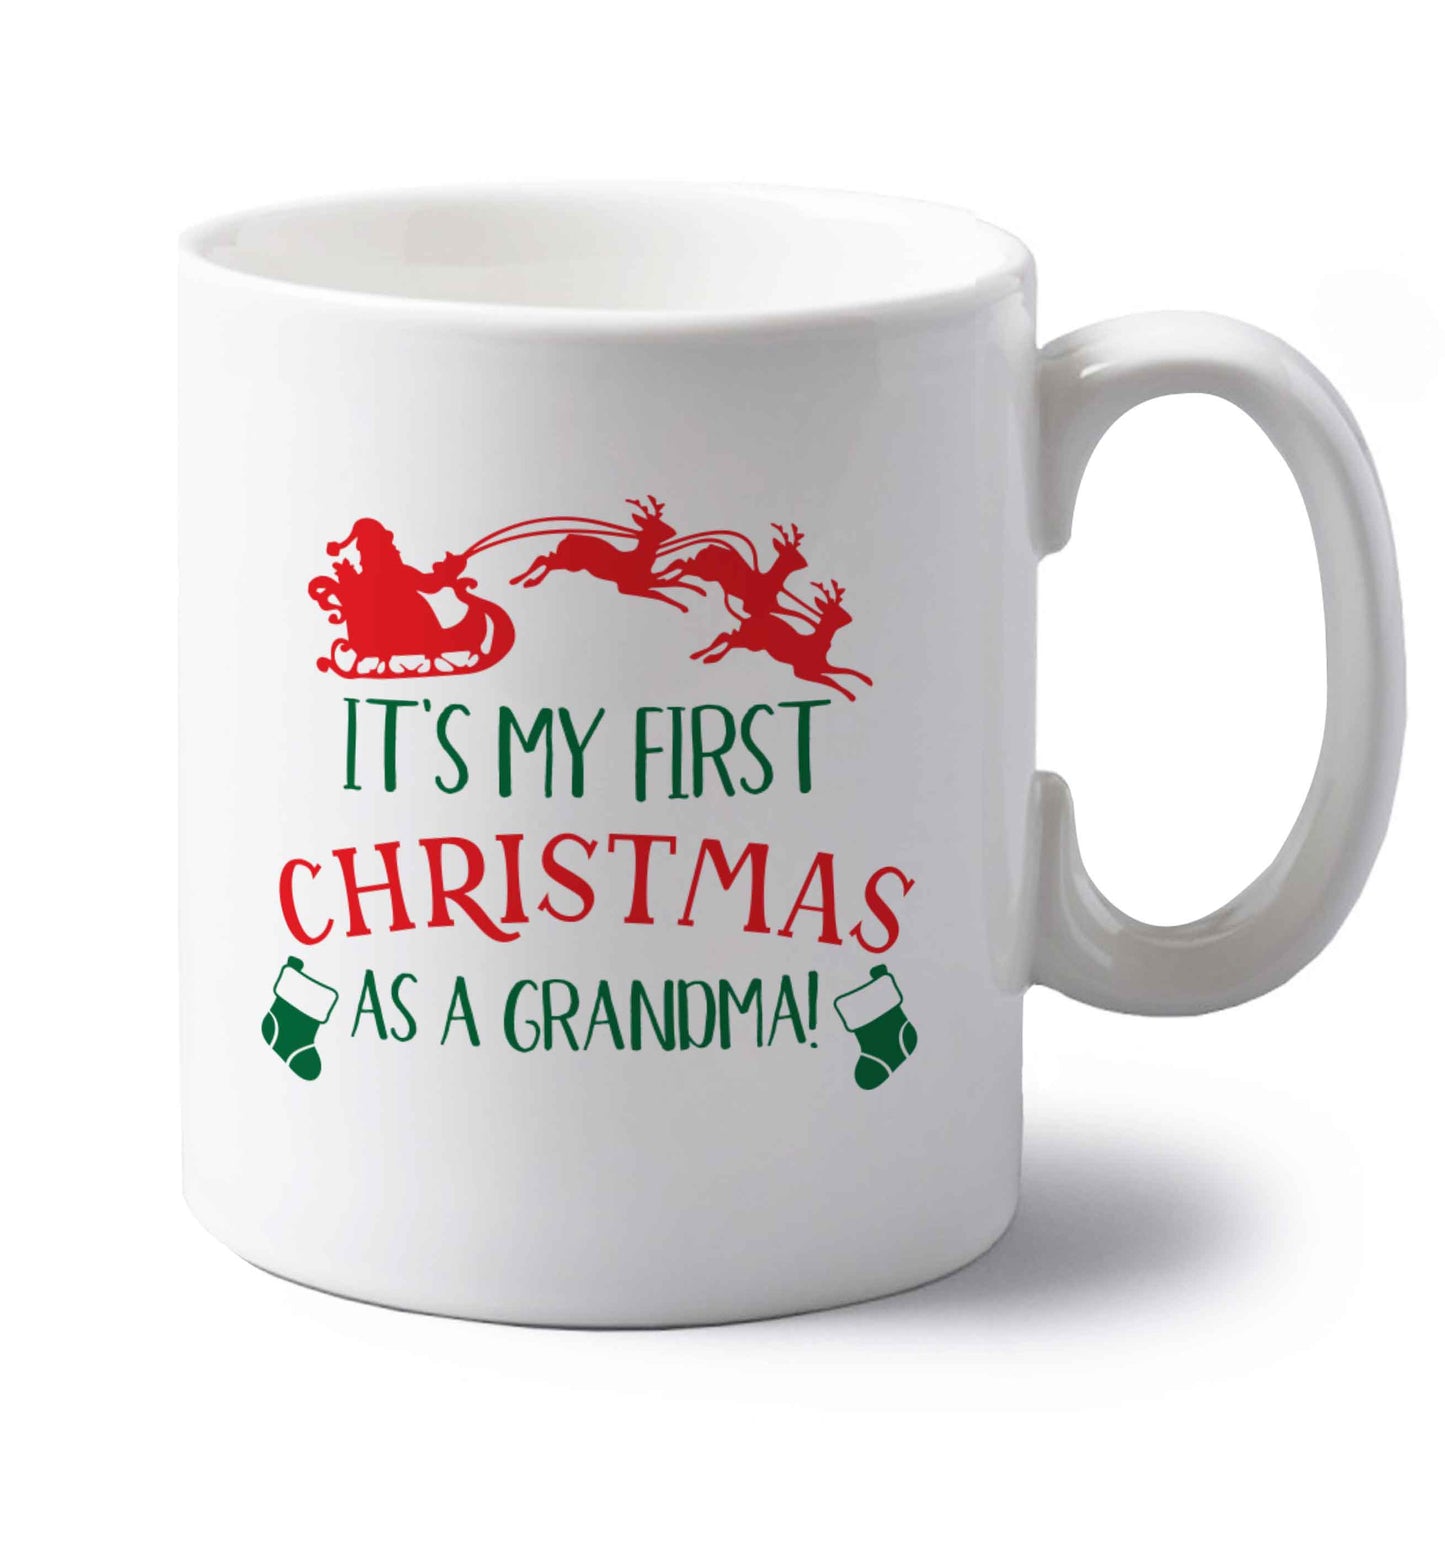 It's my first Christmas as a grandma! left handed white ceramic mug 